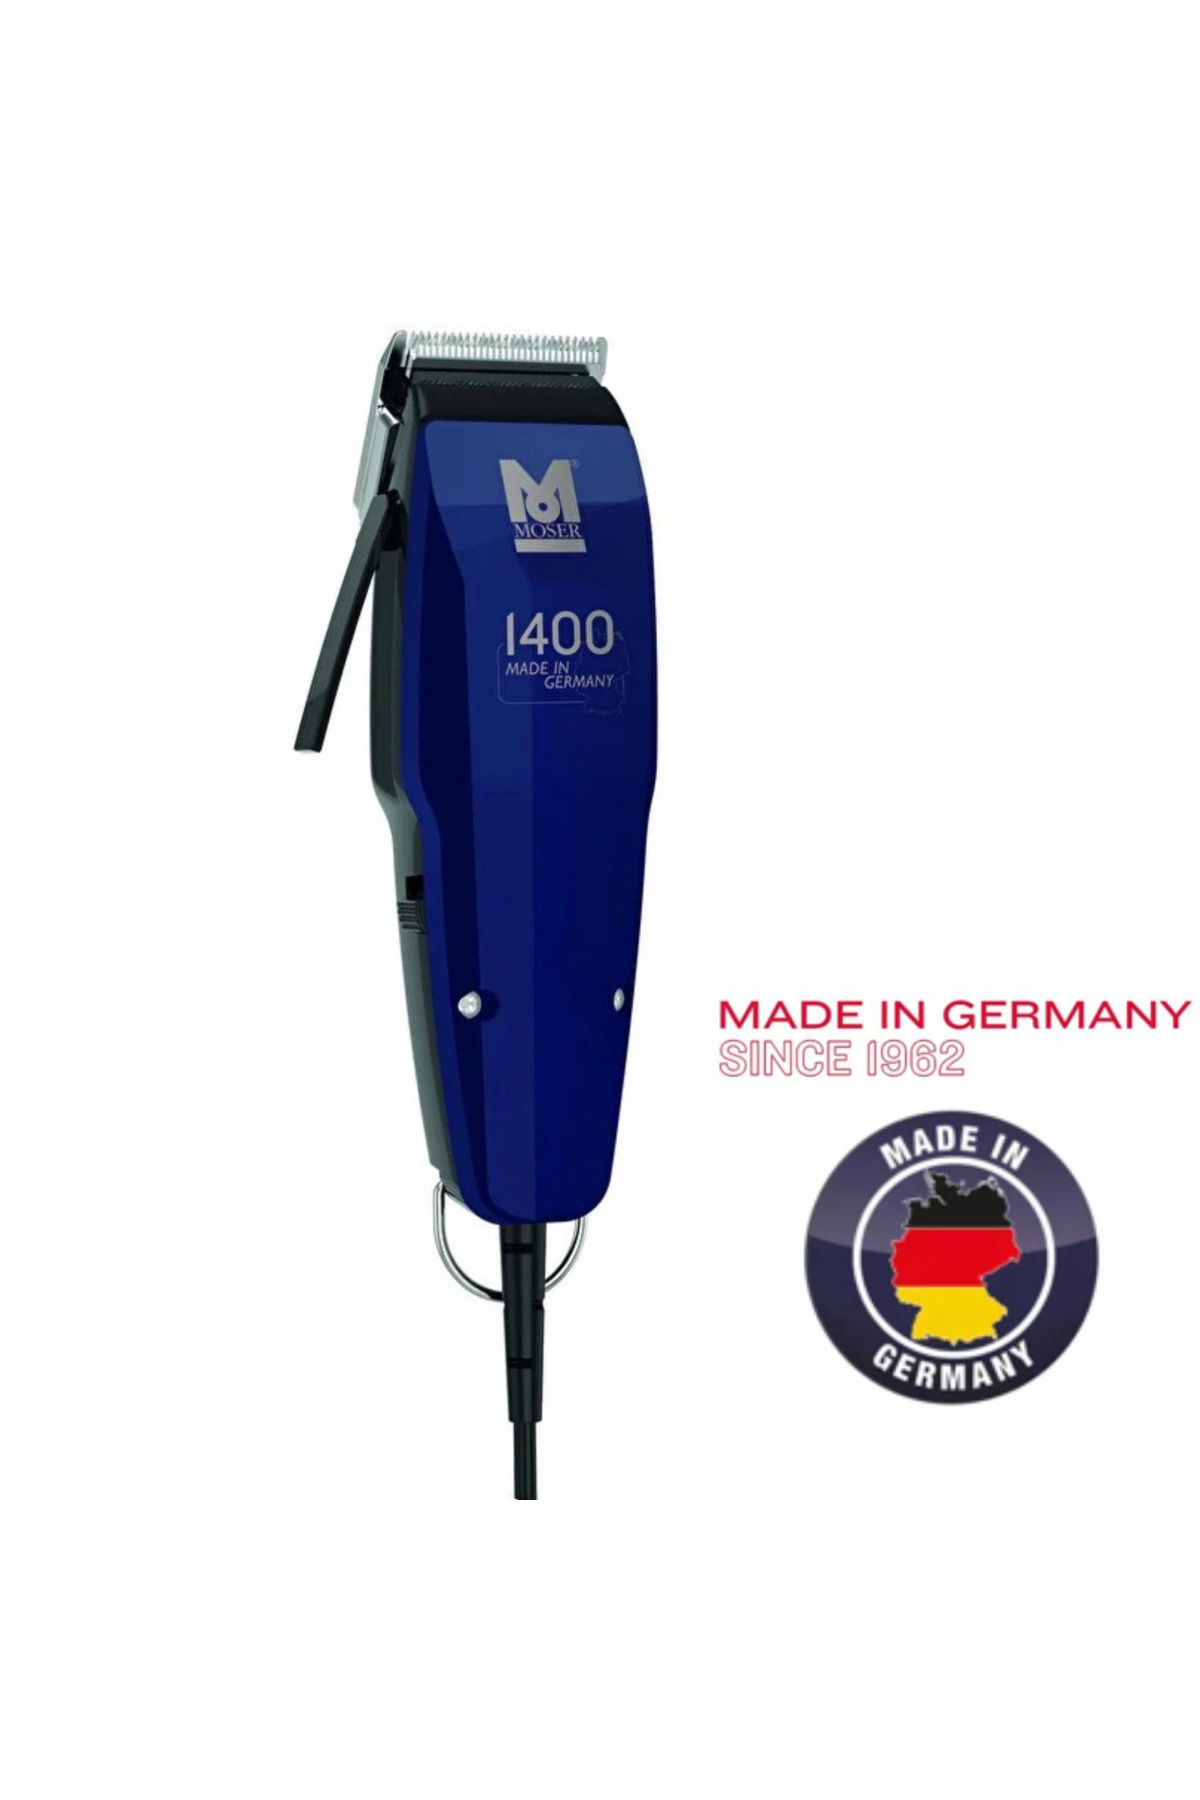 Moser 1400-0452 1400 Edition Mavi Saç Kesme Makinesi Alman Malı